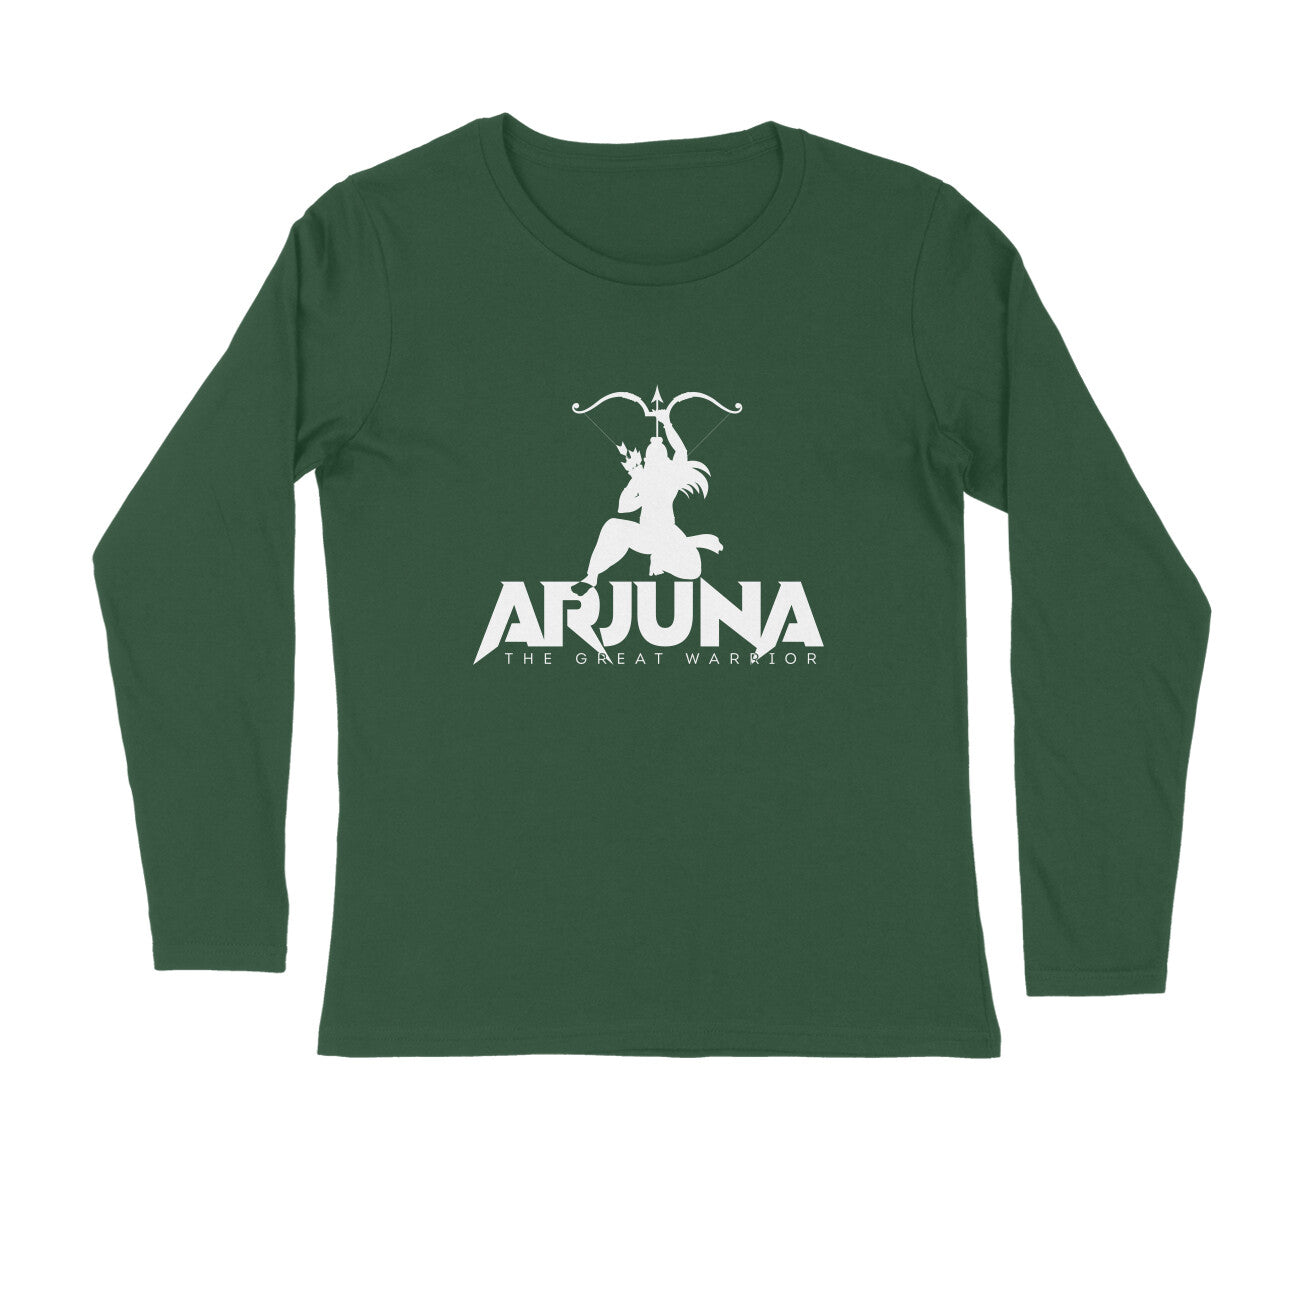 Arjuna: The Great Warrior Full Sleeve T-shirt